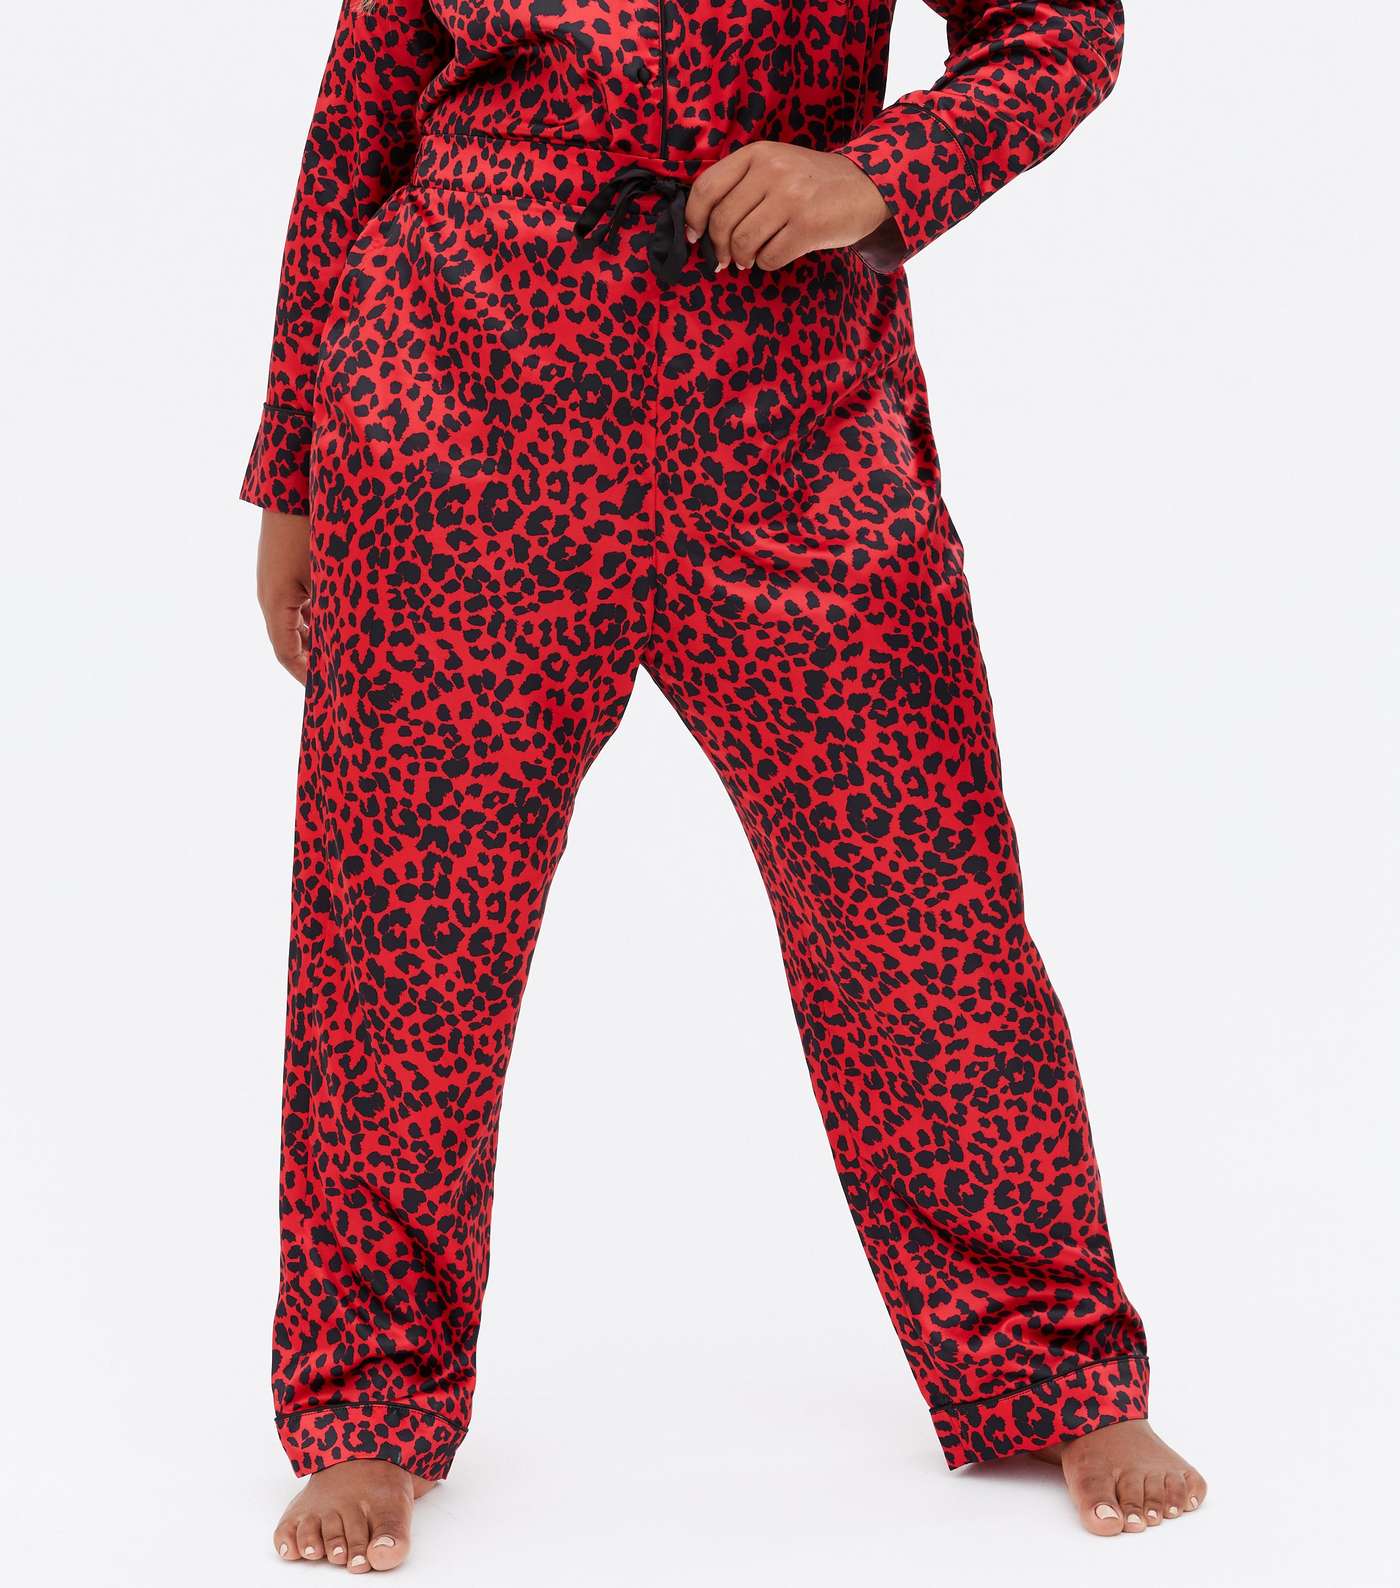 Curves Red Satin Trouser Pyjama Set with Leopard Print Image 3